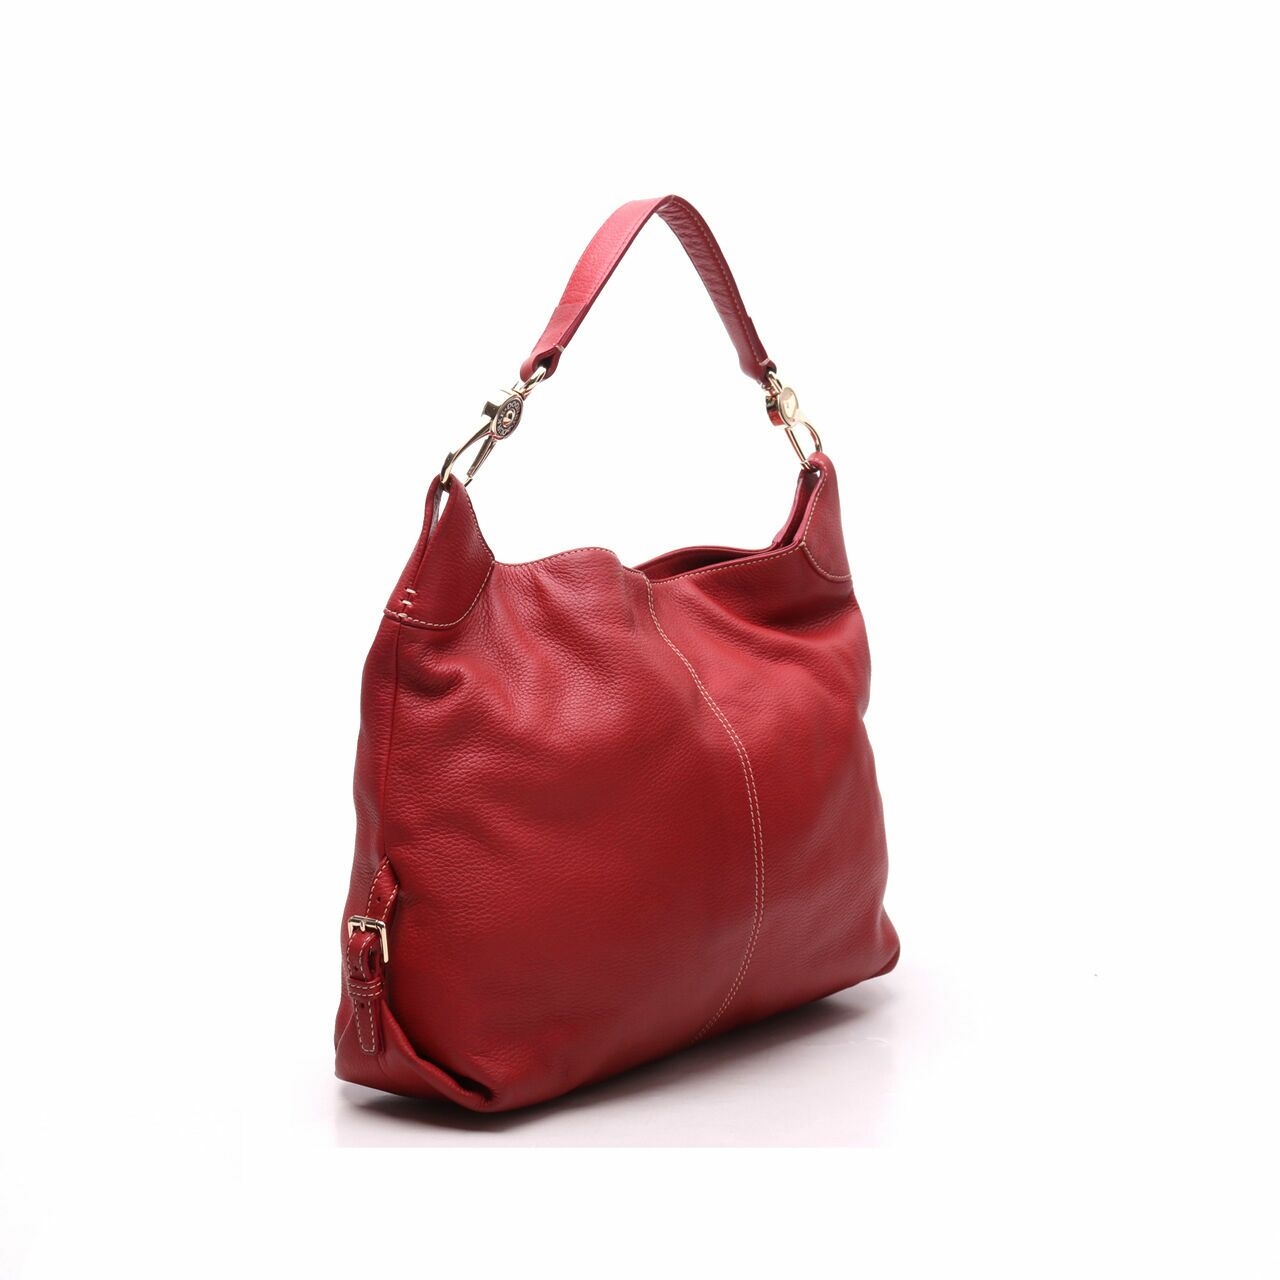 Dooney & Bourke Red Tote Bag